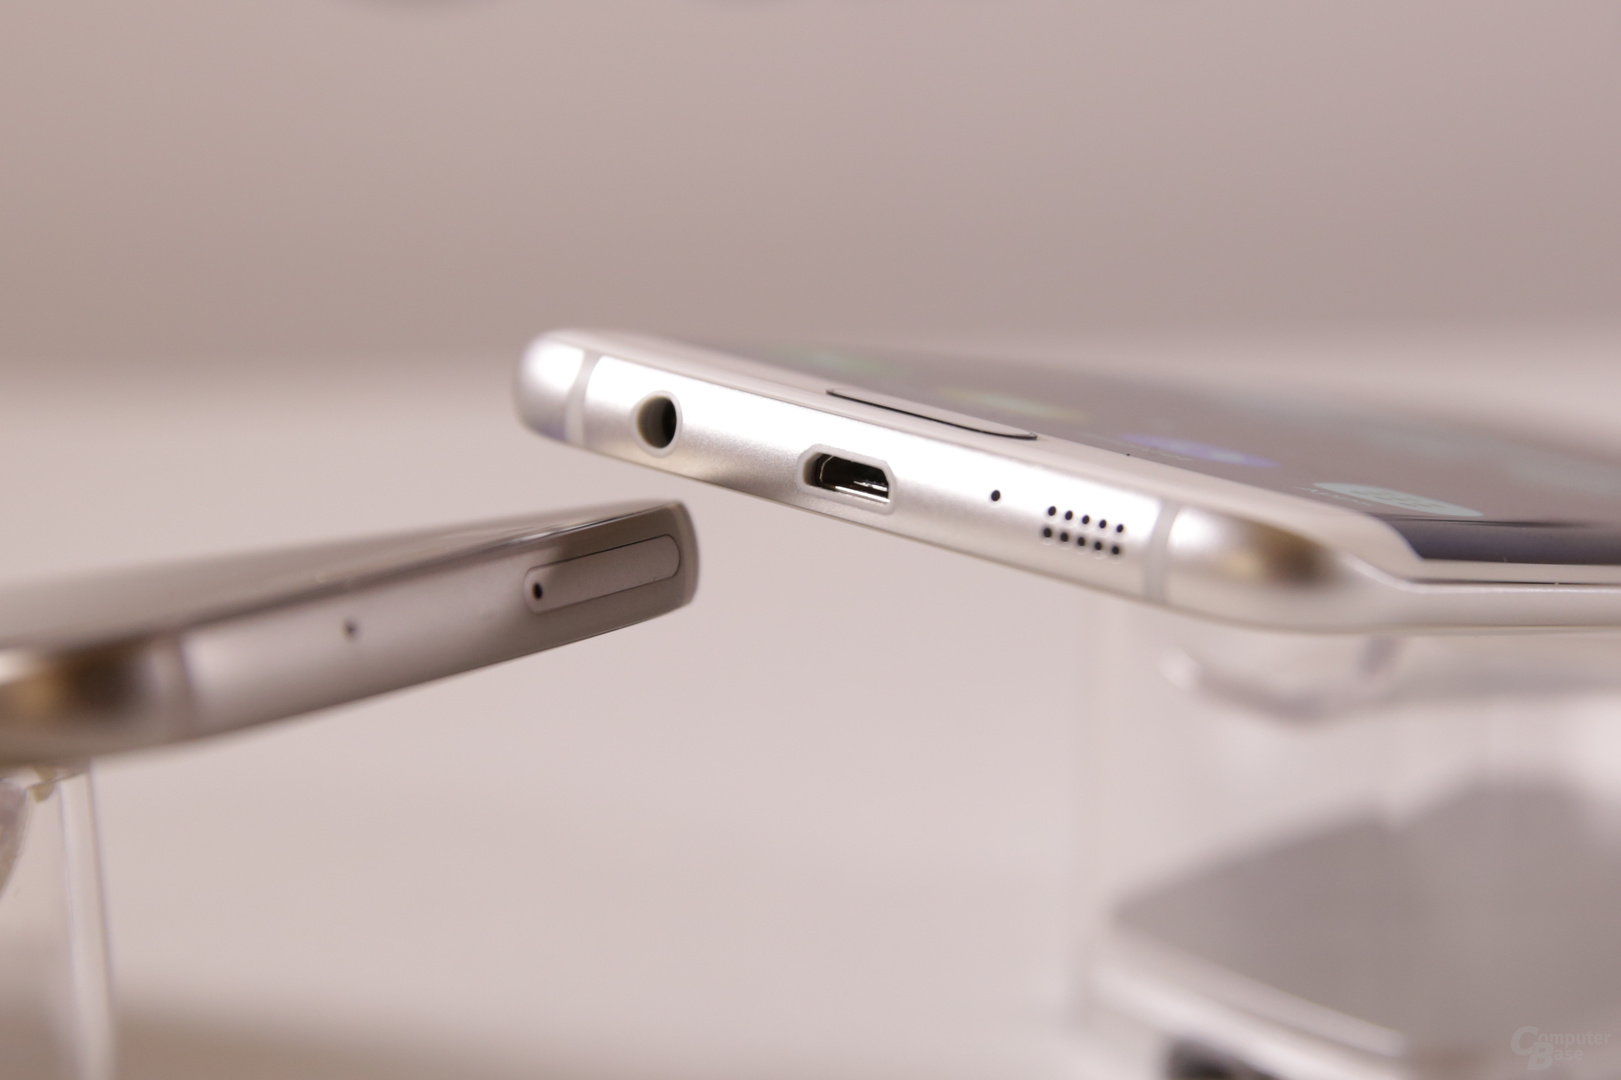 Das Galaxy S7 (edge) nutzt weiterhin Micro-USB 2.0